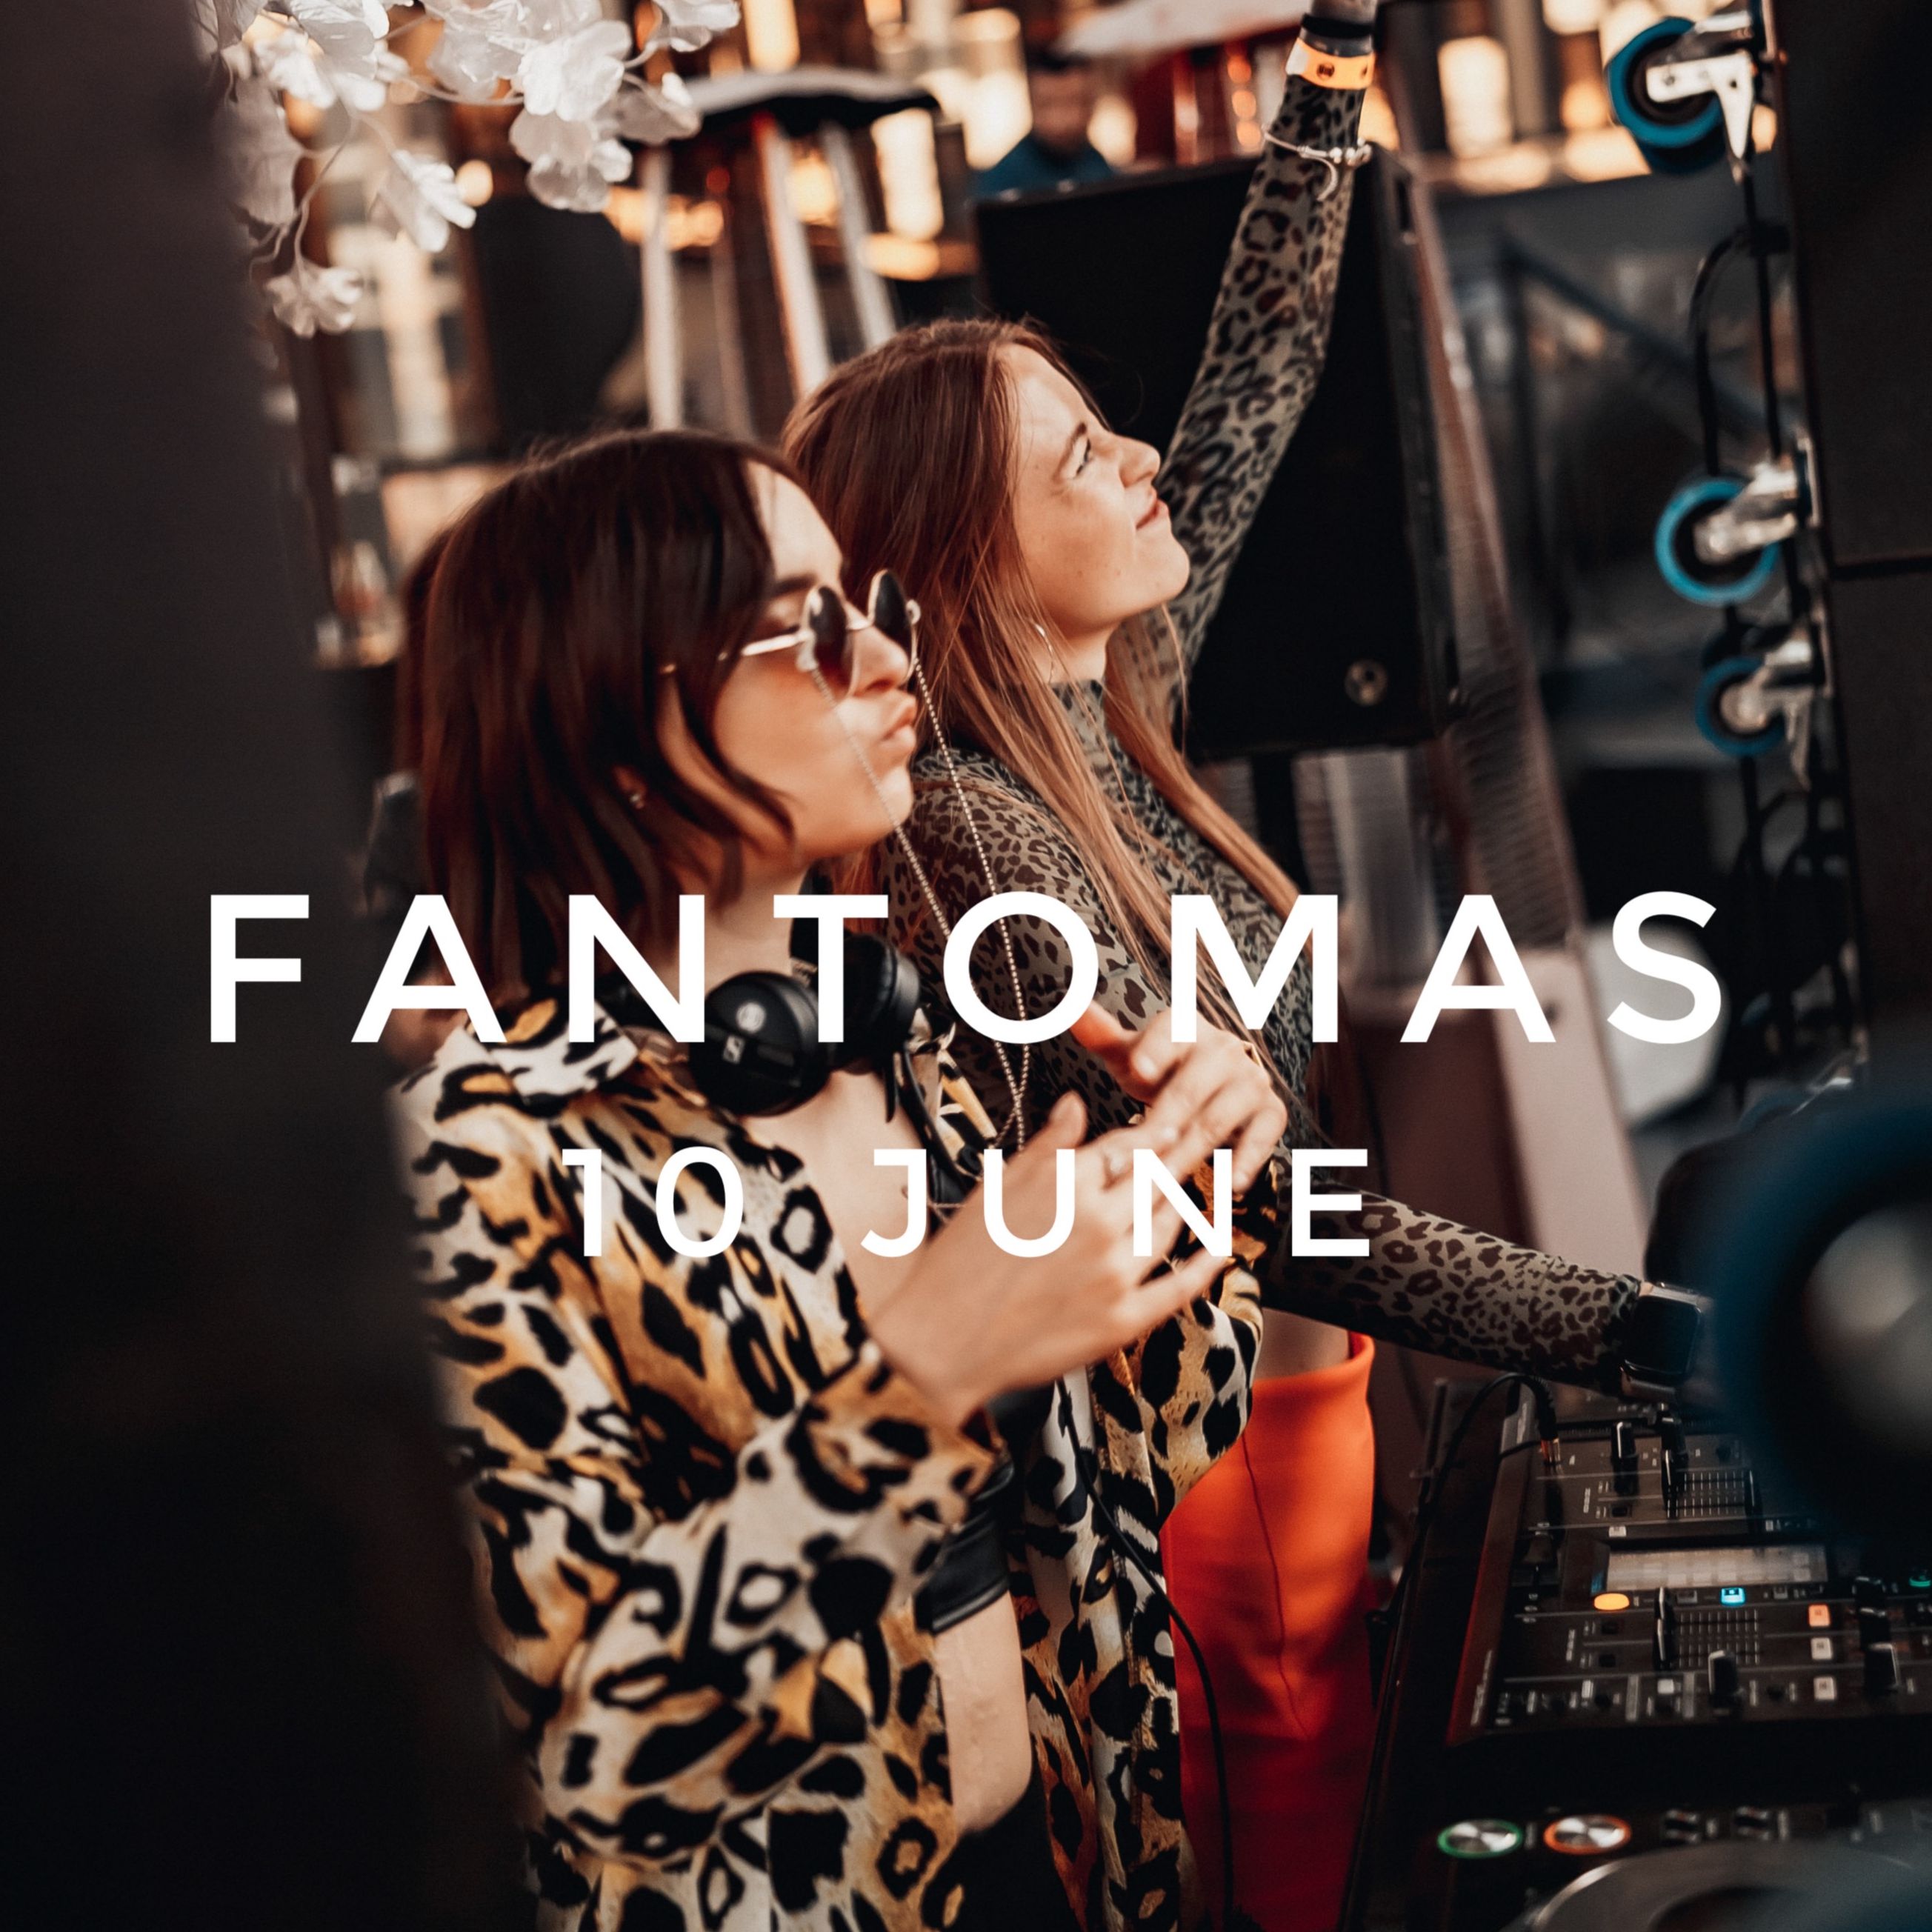 Ladata Natasha Wax & Sony Vibe - @Fantomas Rooftop 10.06